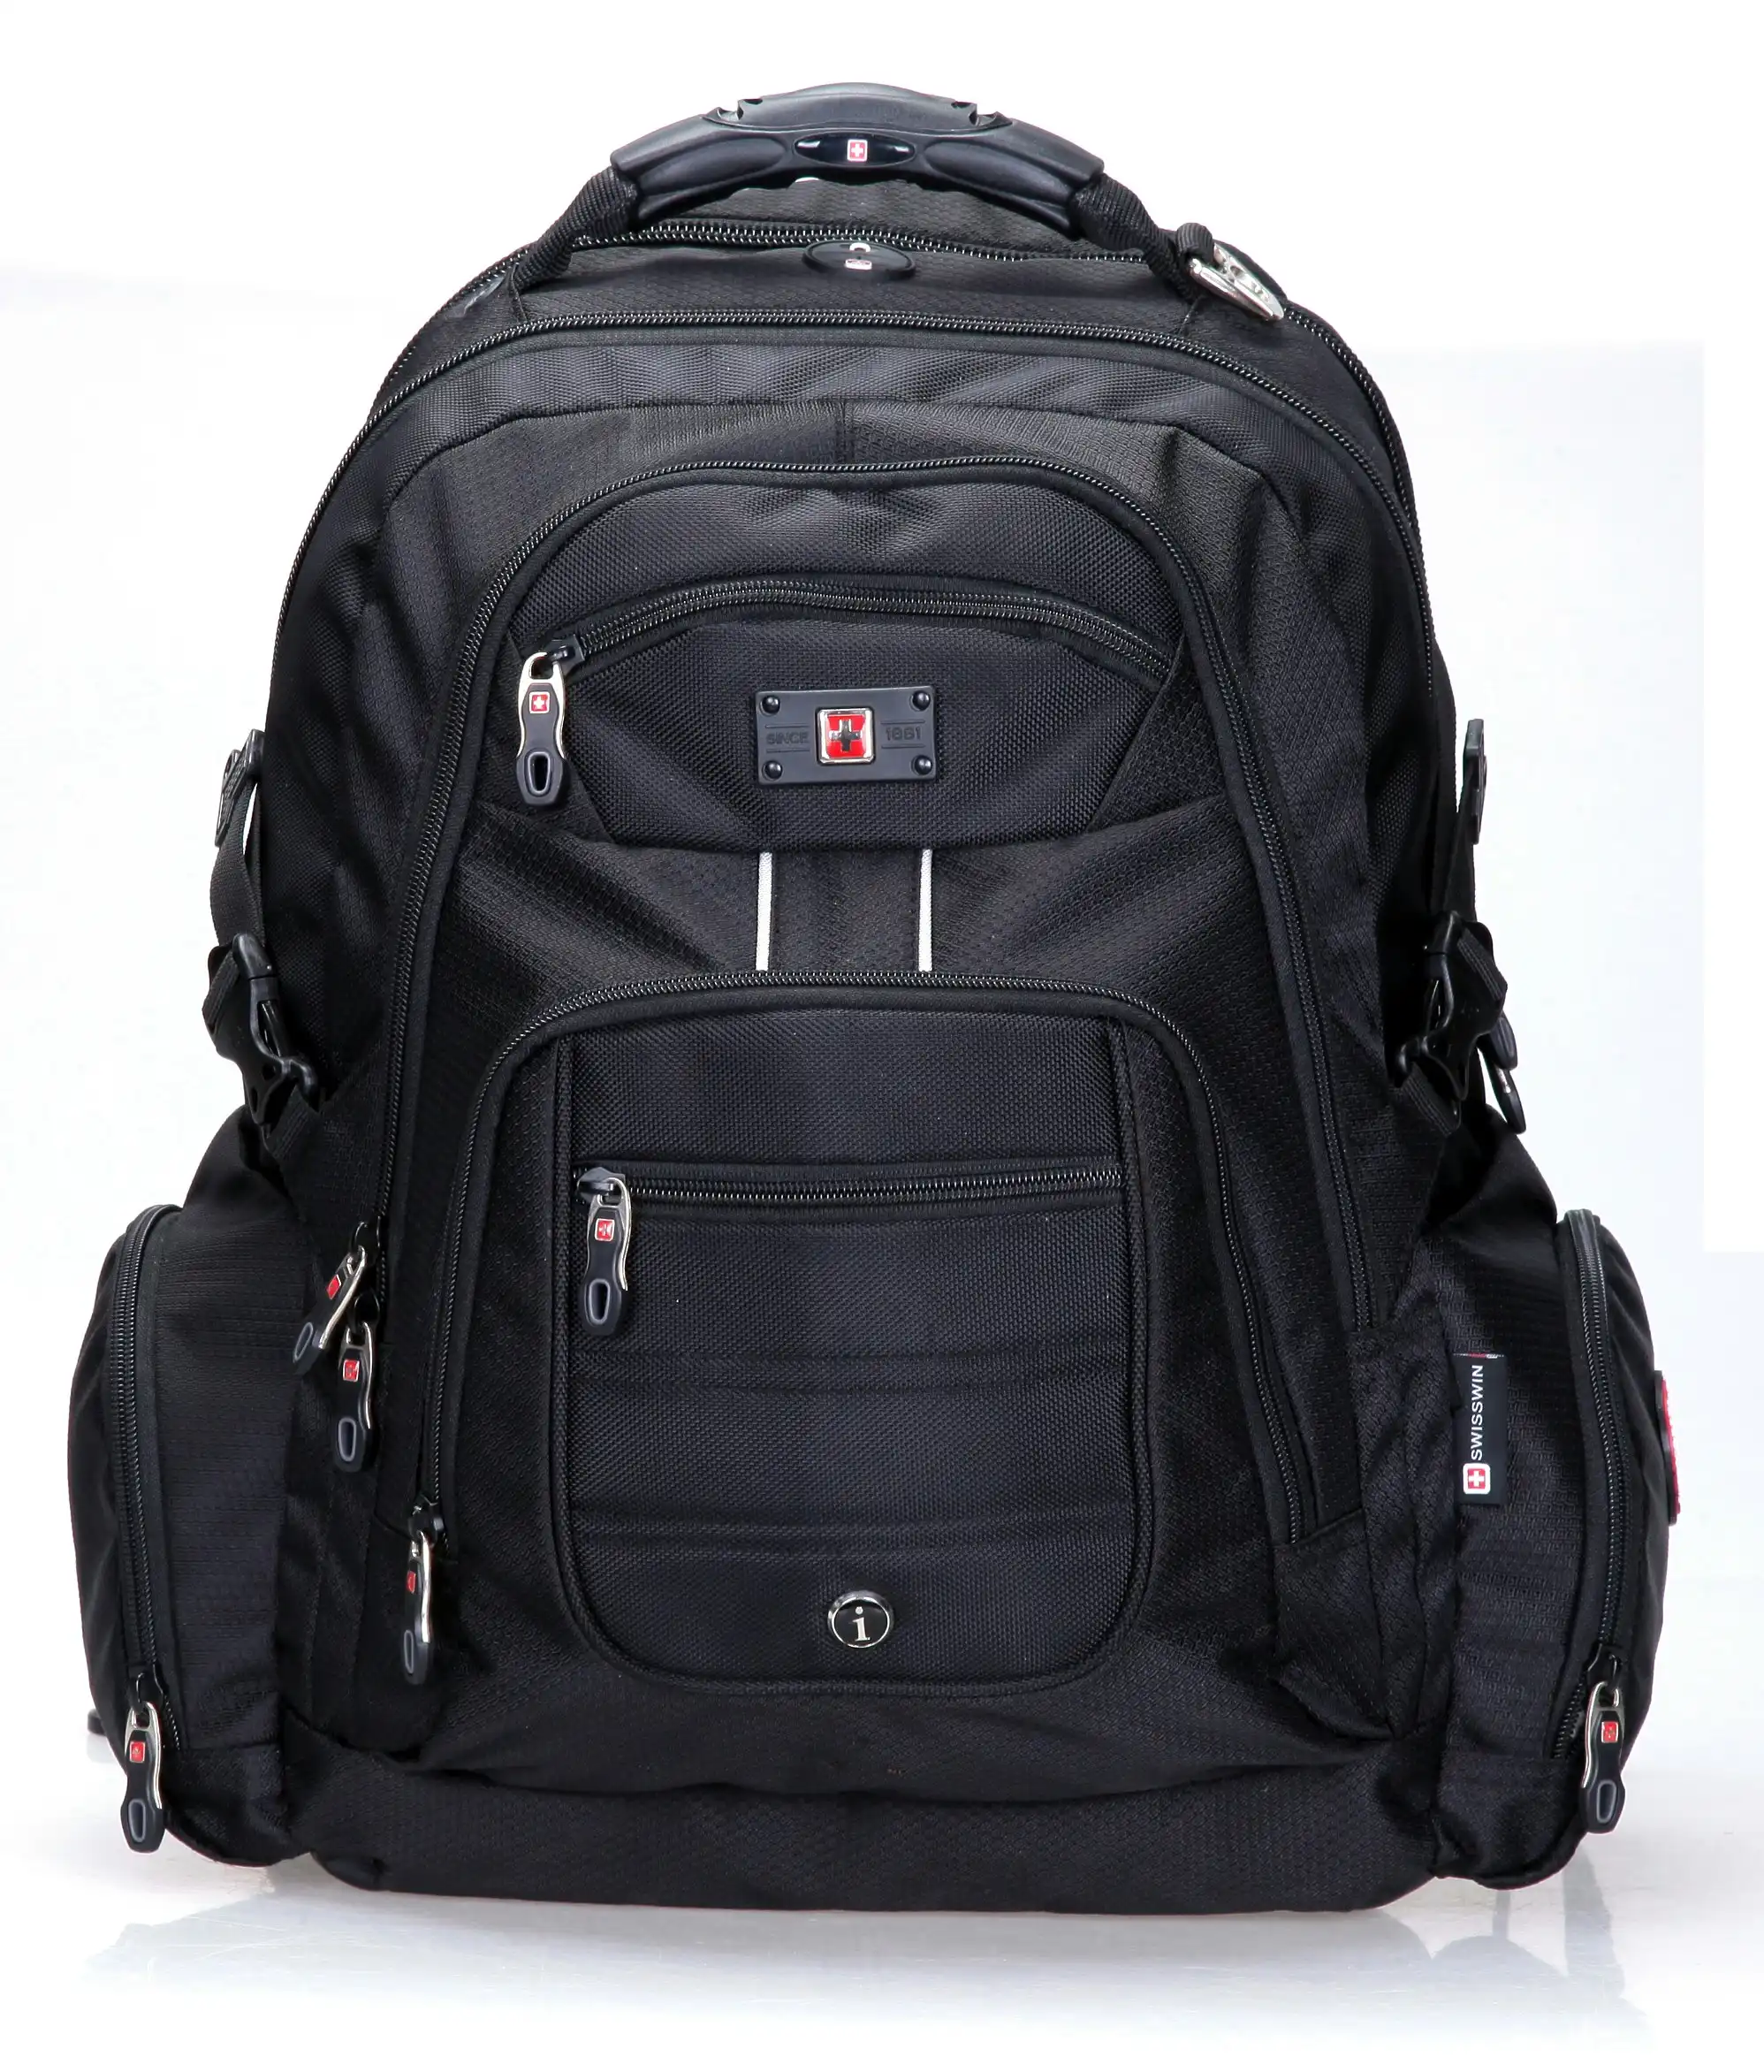 Swisswin Swiss Water-Resistant 17" Laptop Backpack School Backpack Travel Shoulder Bag Black SW9801